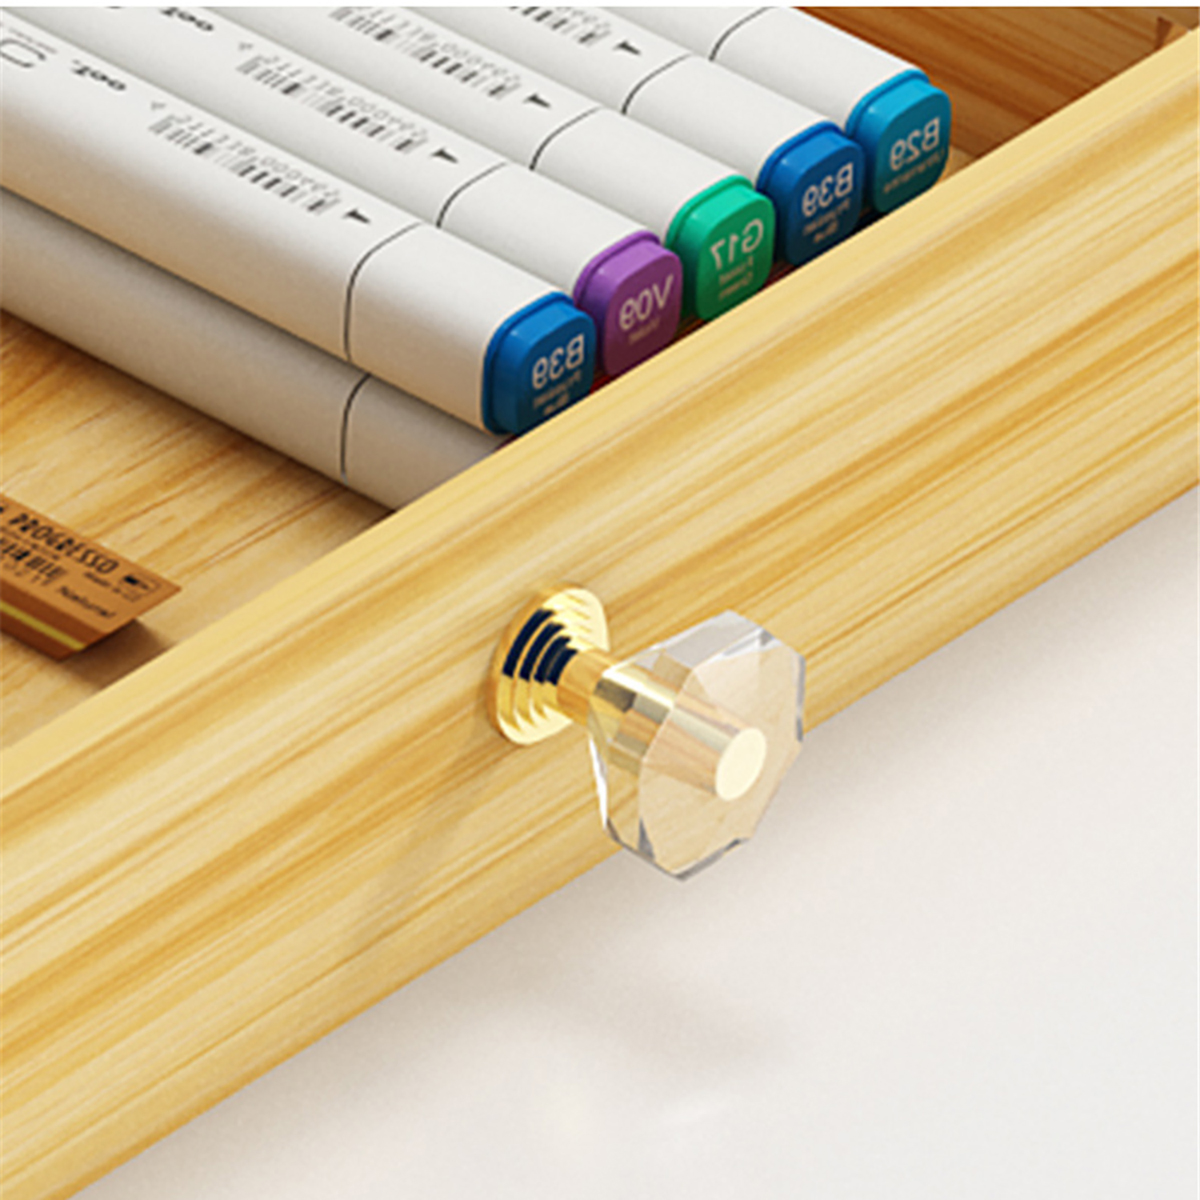 Pen-Holder-Wooden-Pencil-Storage-Holder-Study-Home-Office-Case-Rack-Drawer-1829251-9